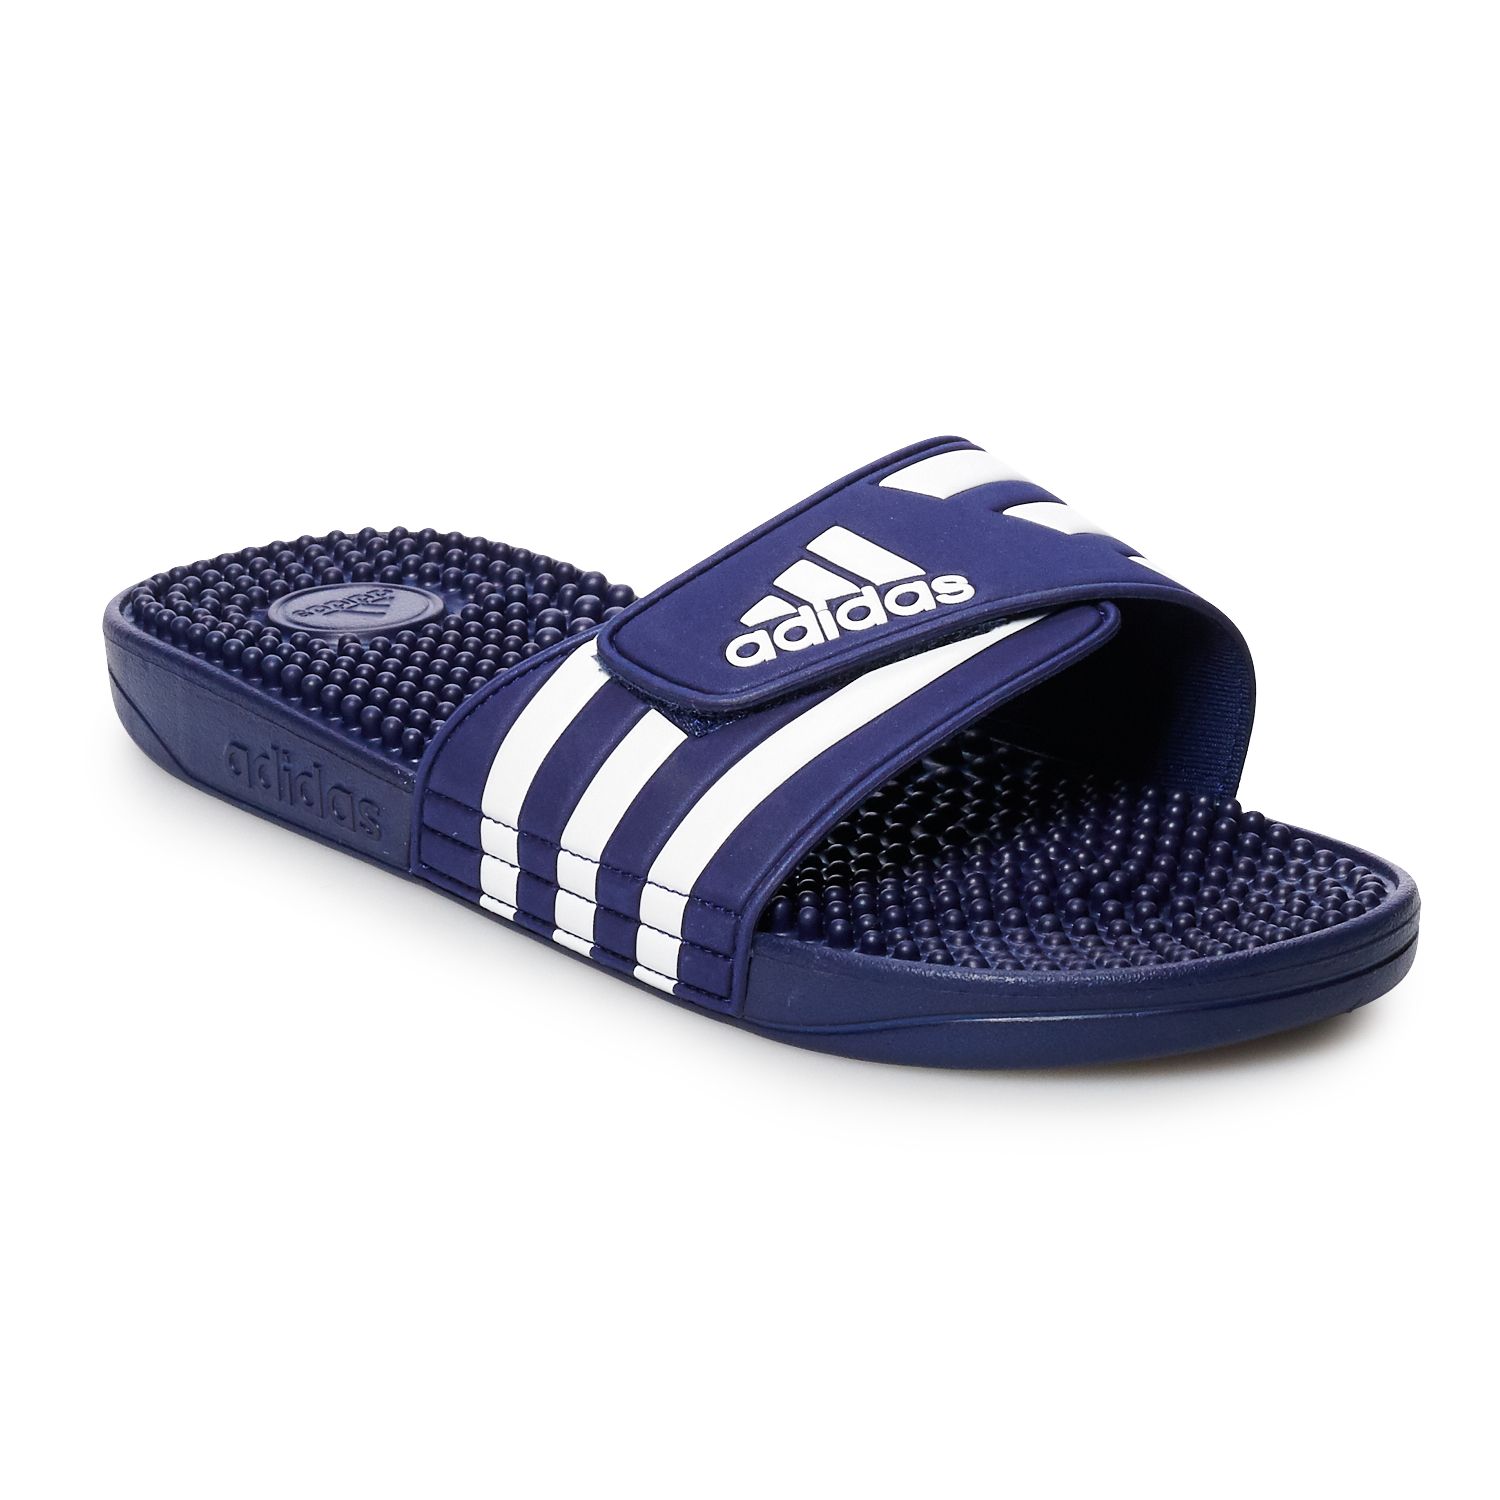 blue adidas sandals